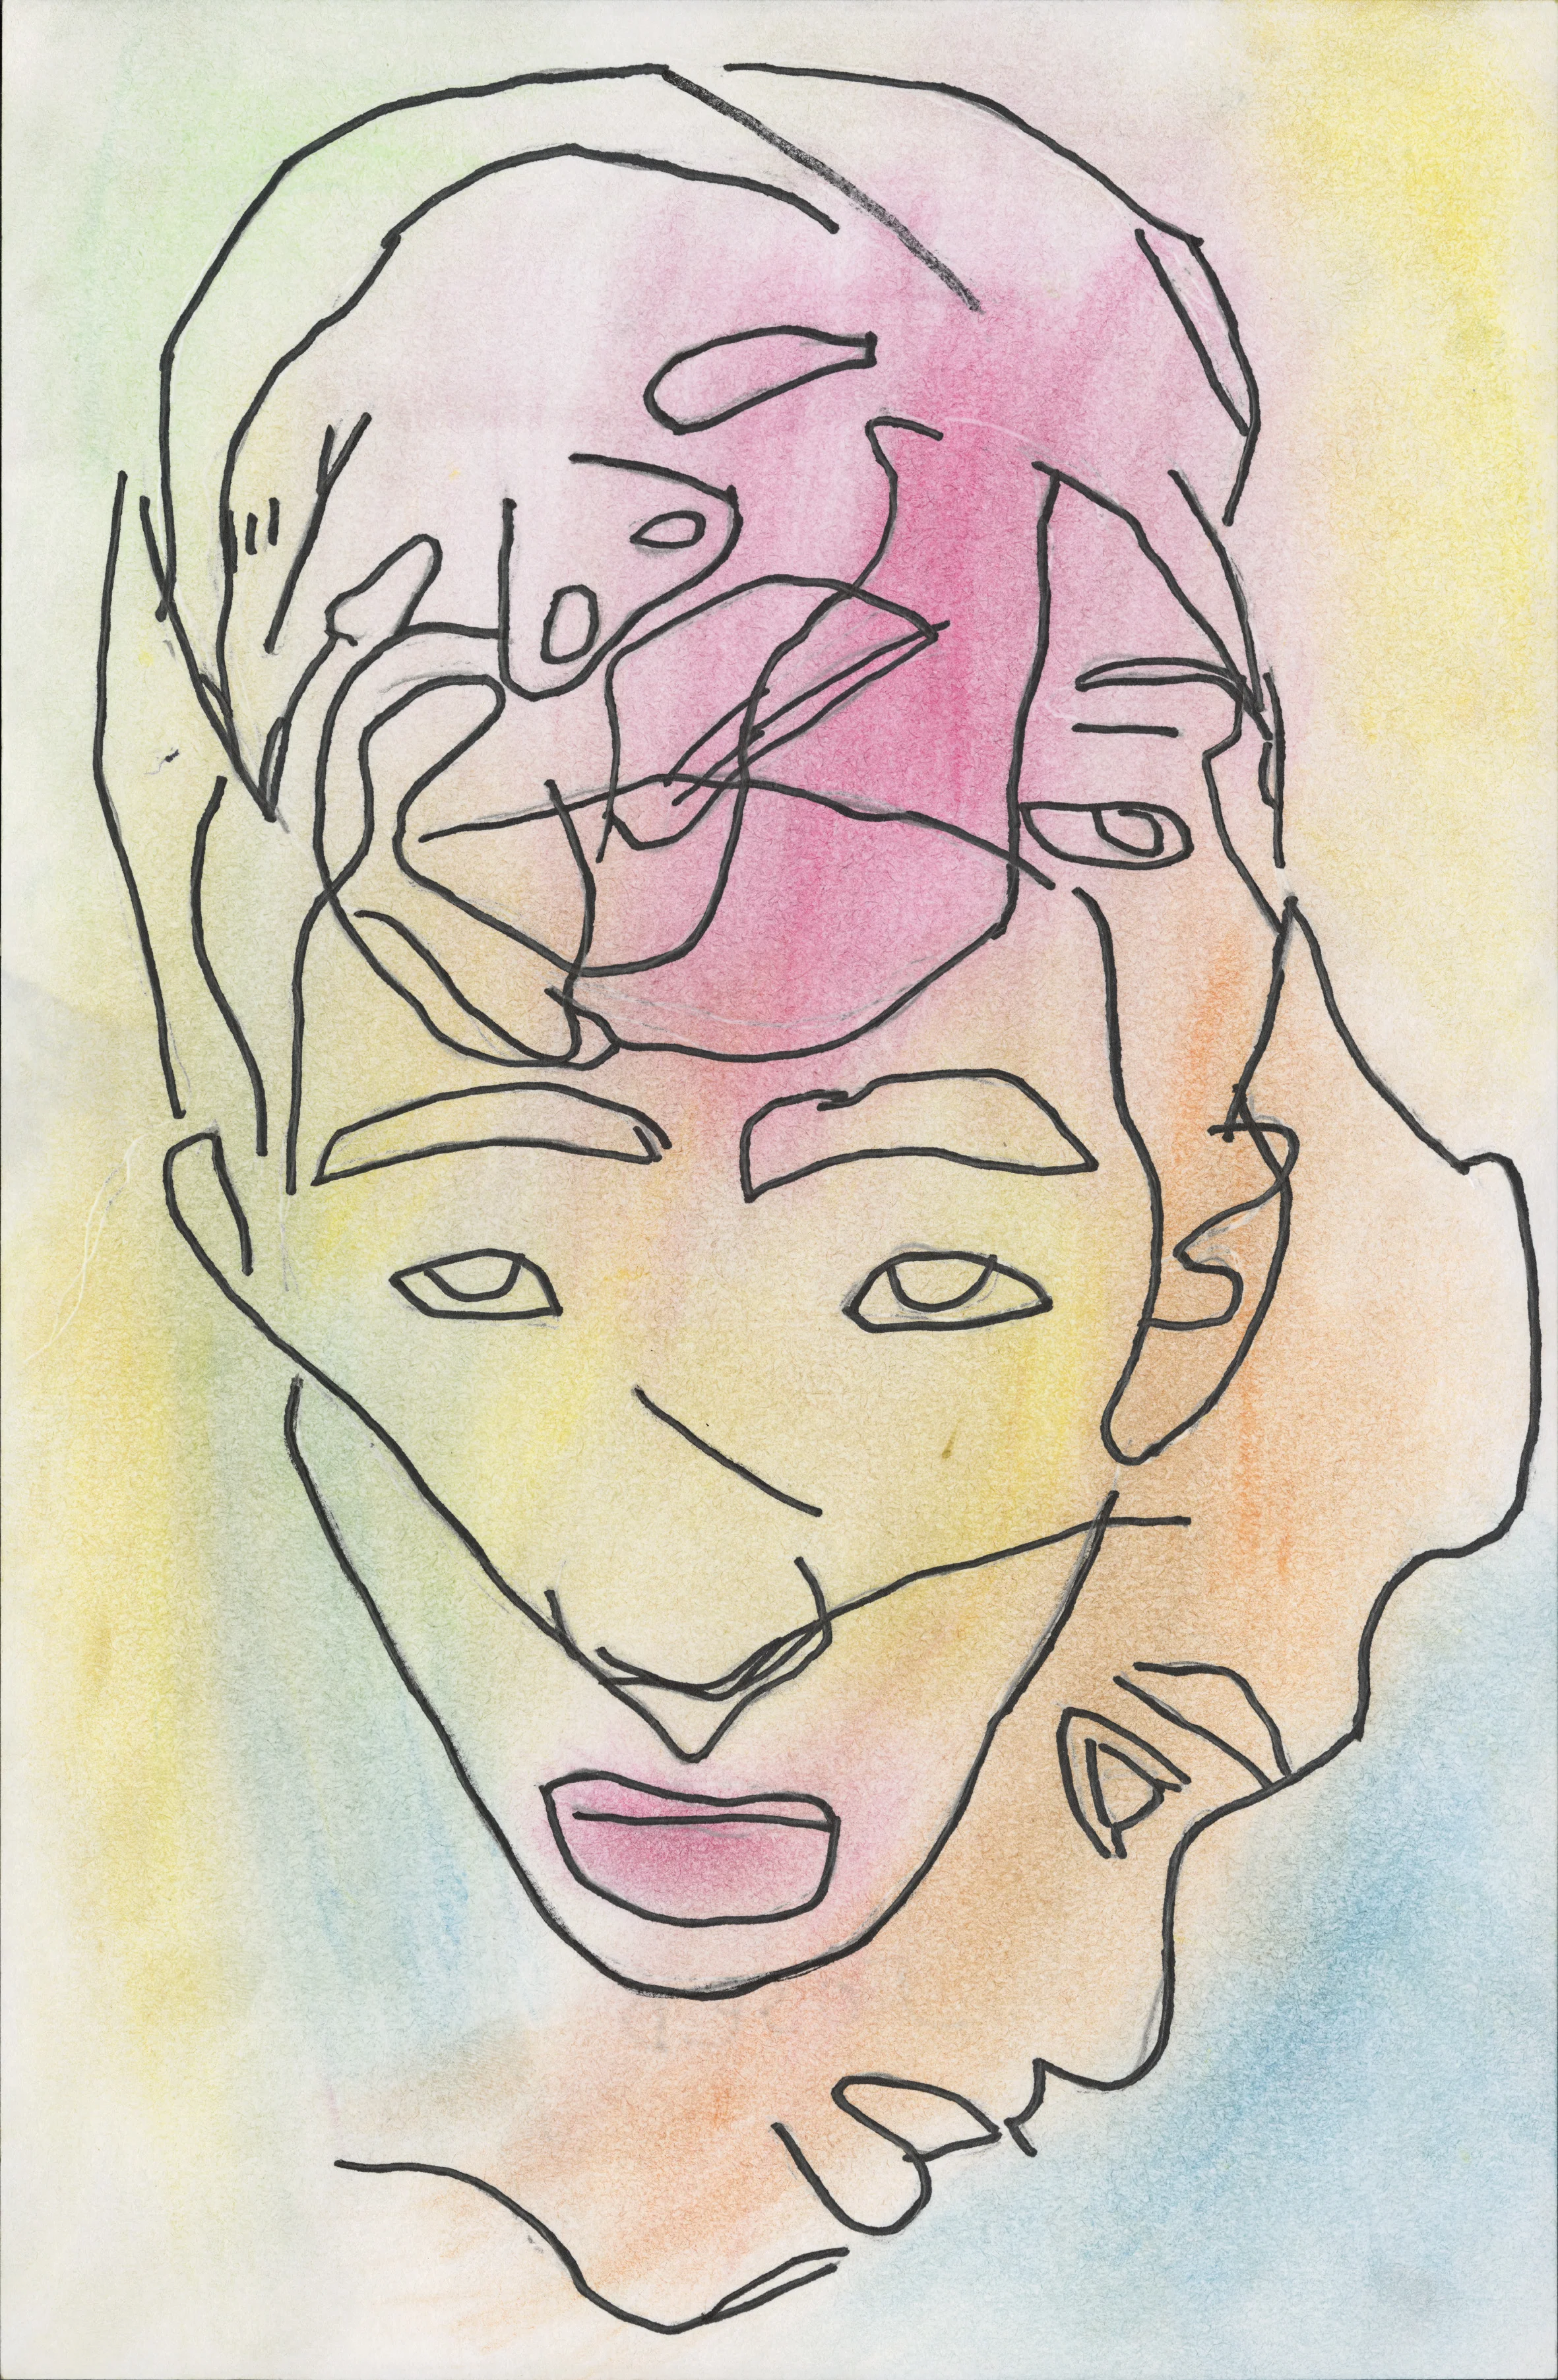 Joseb Hasahatan Sirait(19歲)，《綫條畫》，墨⽔筆和⽊顔⾊紙本。Joseb ⾃⼩便喜愛繪畫，認為繪畫最能讓他表達⾃⼰所想和情感。在這幅作品中，他先為對象的⾯貌拍攝不同⻆度，然後再運⽤線條和⾊彩進⾏創作，把構想栩栩如⽣地展現於畫中。